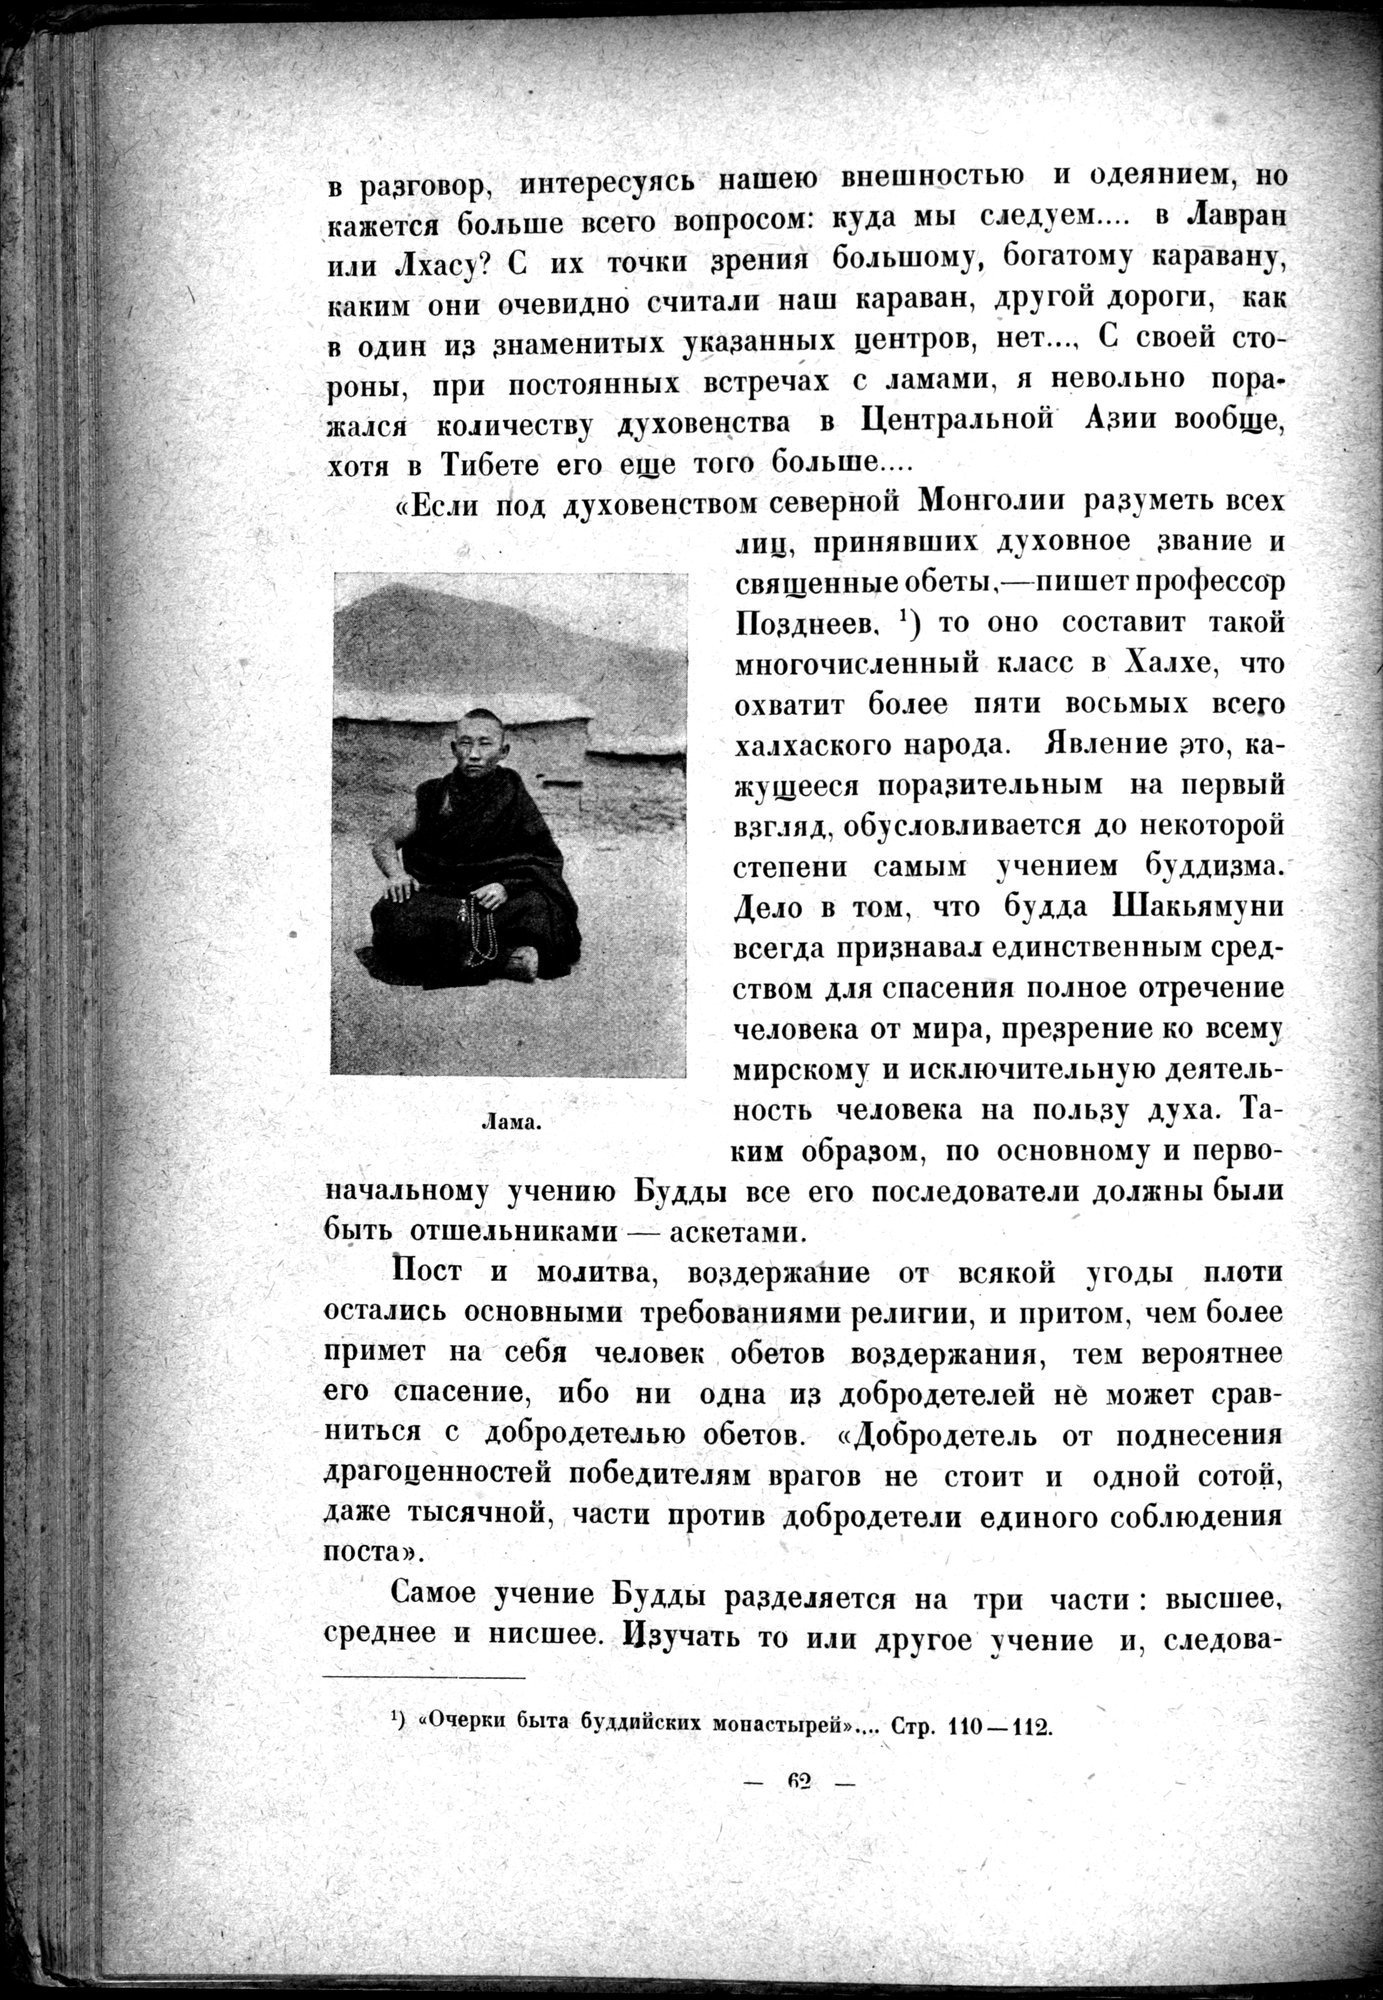 Mongoliya i Amdo i mertby gorod Khara-Khoto : vol.1 / Page 86 (Grayscale High Resolution Image)